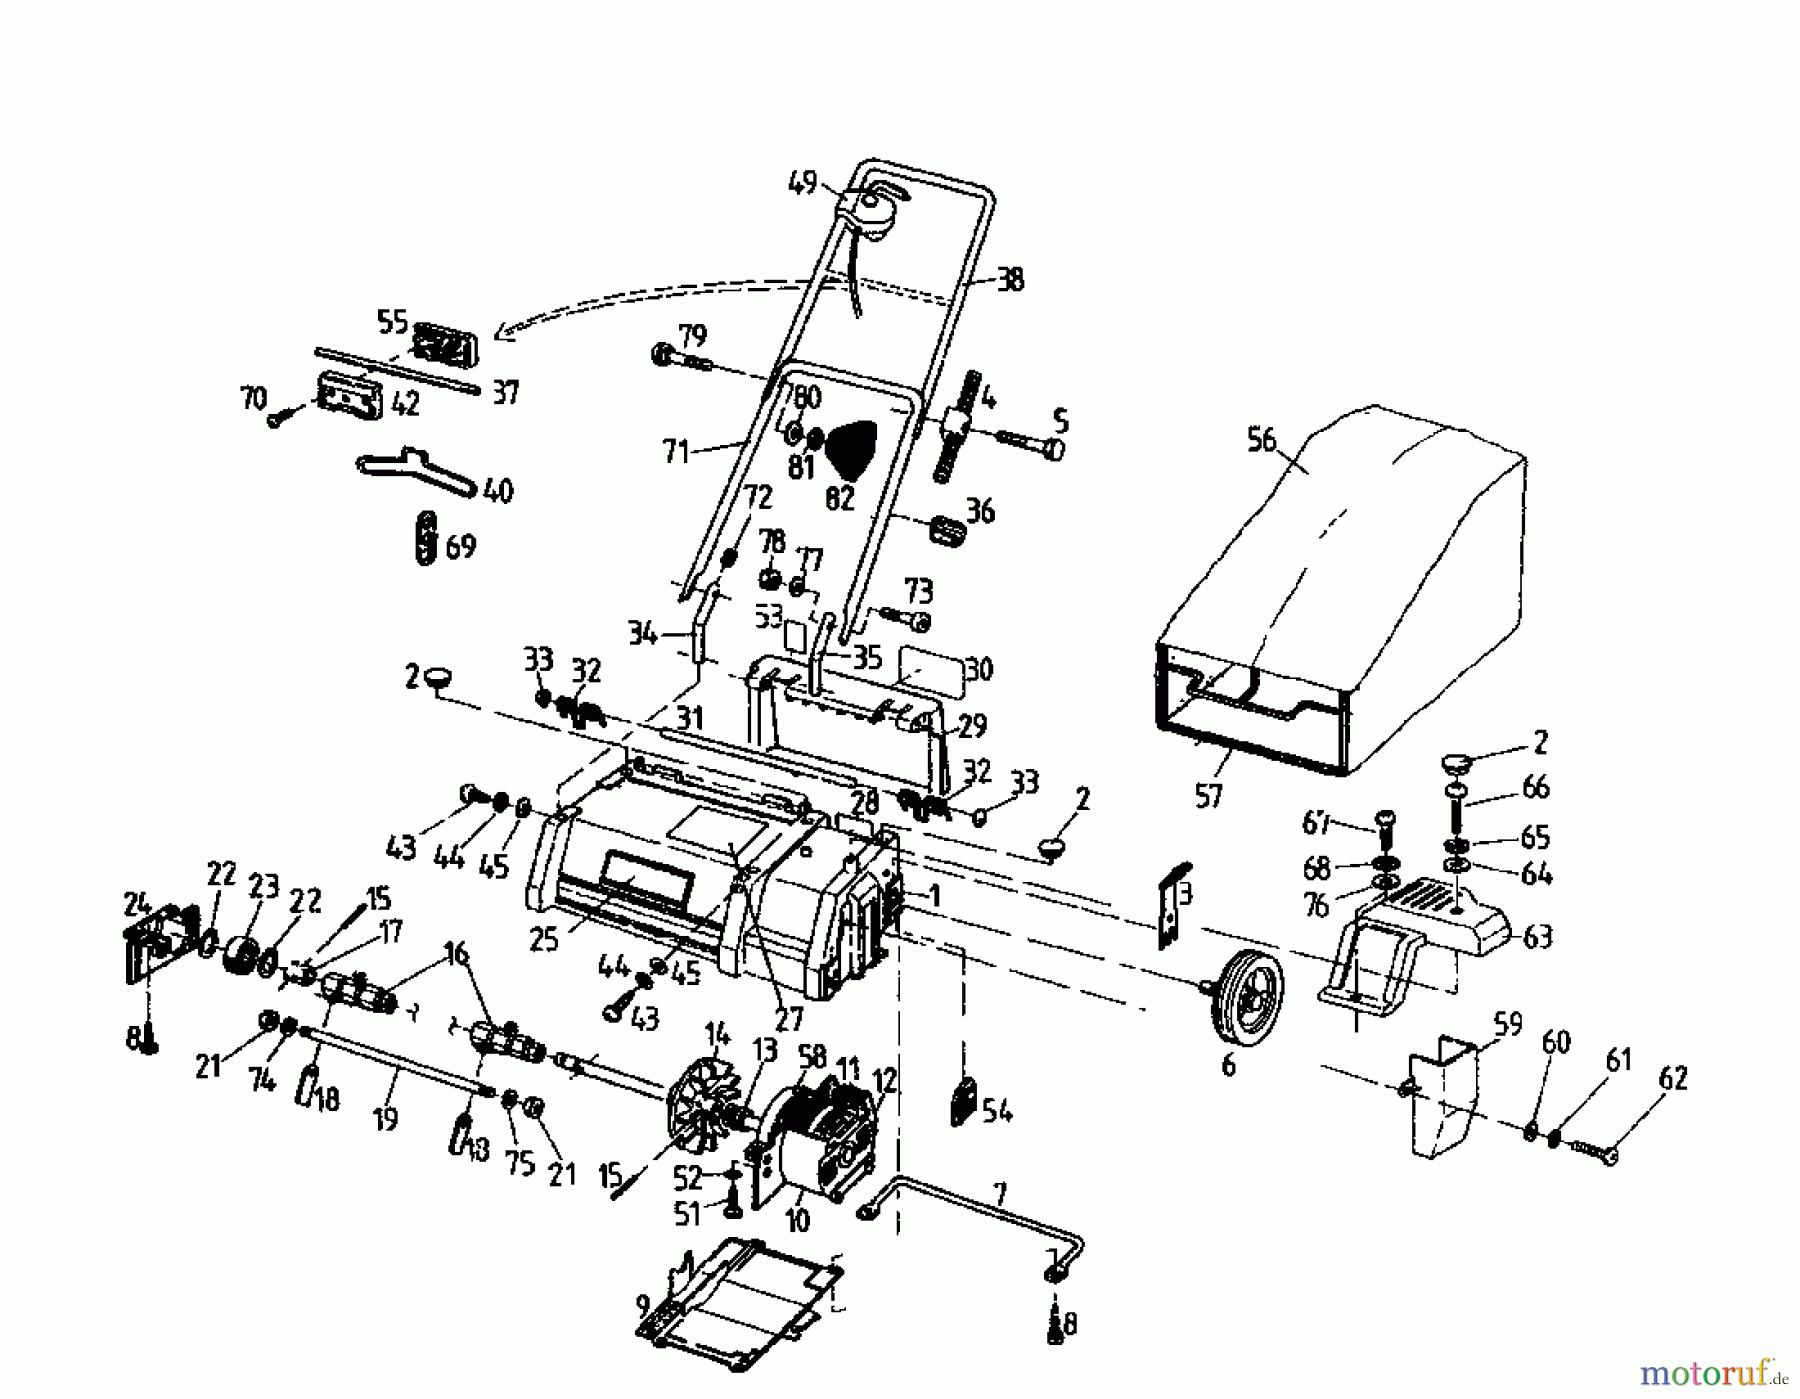  Gutbrod Electric verticutter VE 33 02826.02  (1996) Basic machine